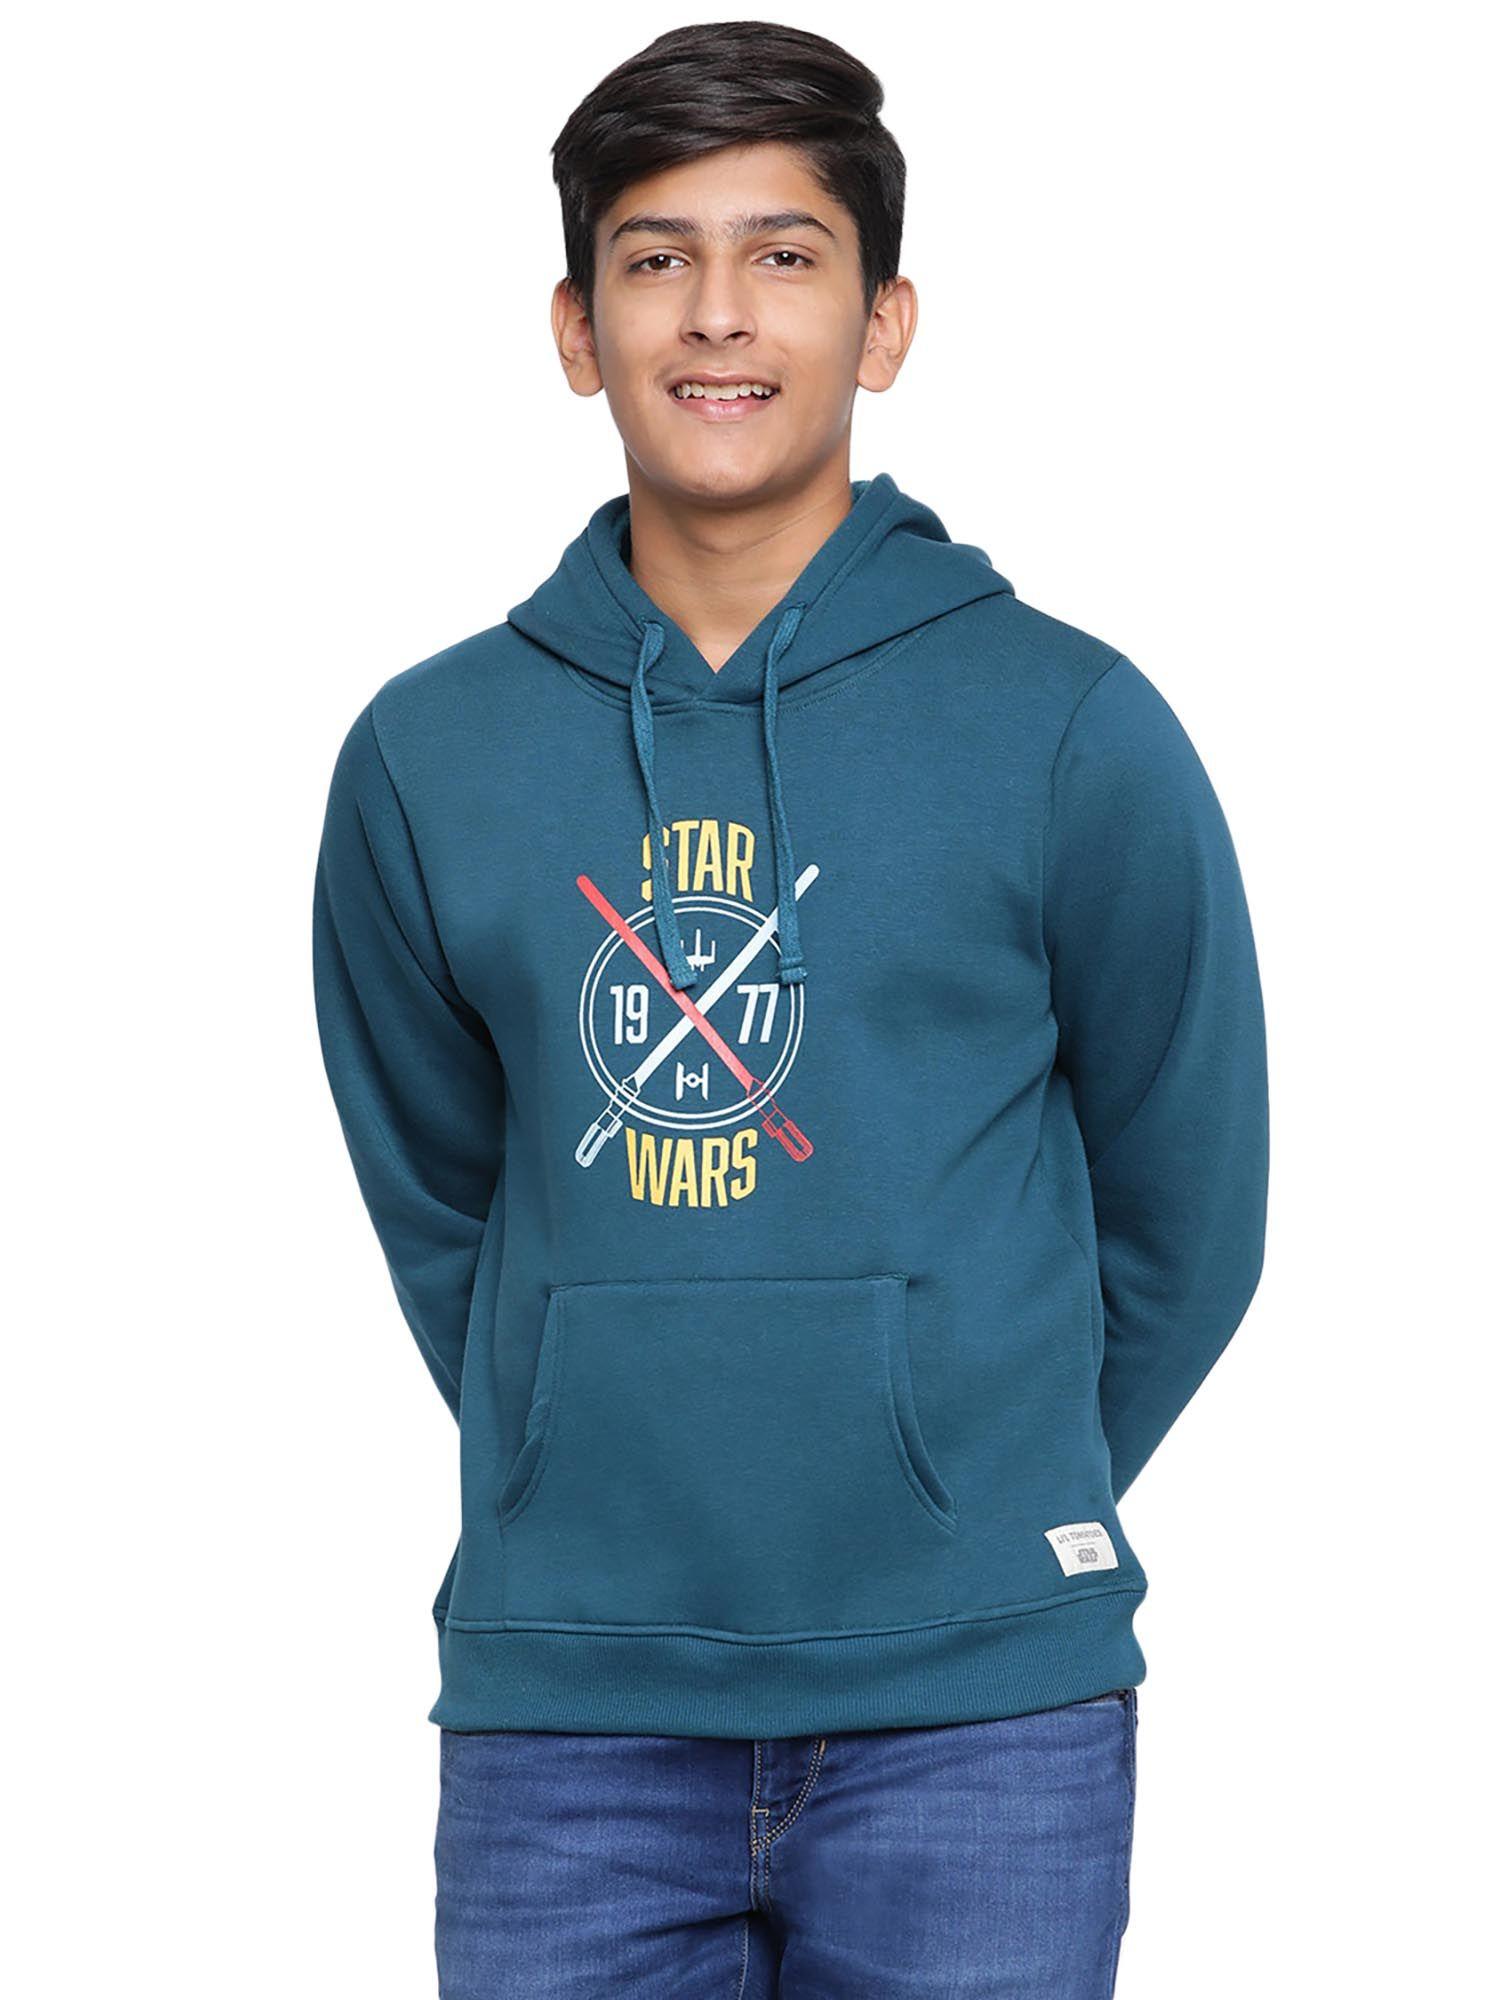 boys star wars cotton fleece hoodies